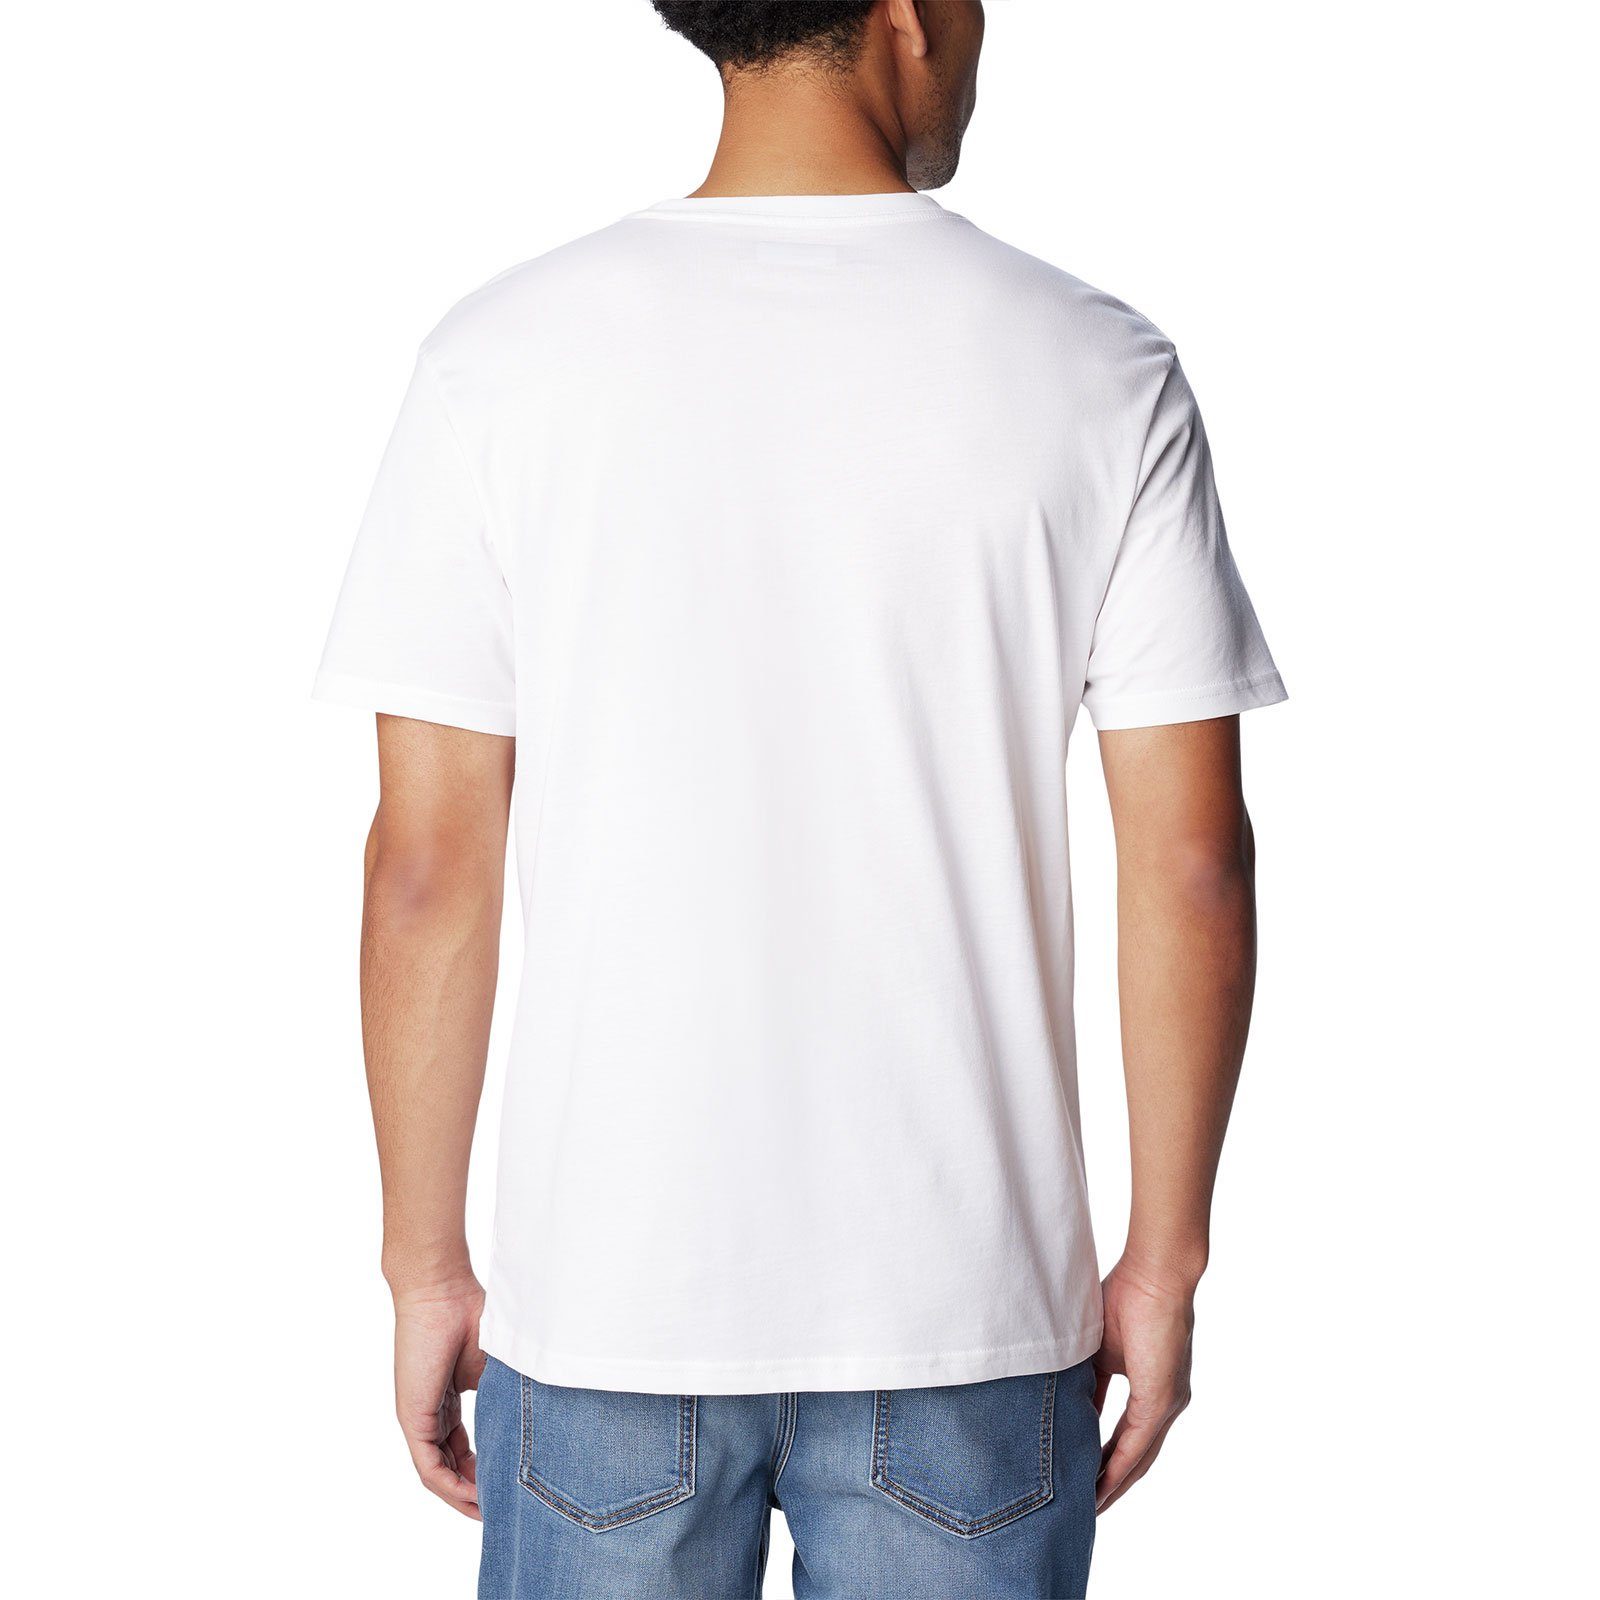 Columbia Kurzarmshirt Basic T-Shirt Logo™ mit Rundhalsausschnitt white 112